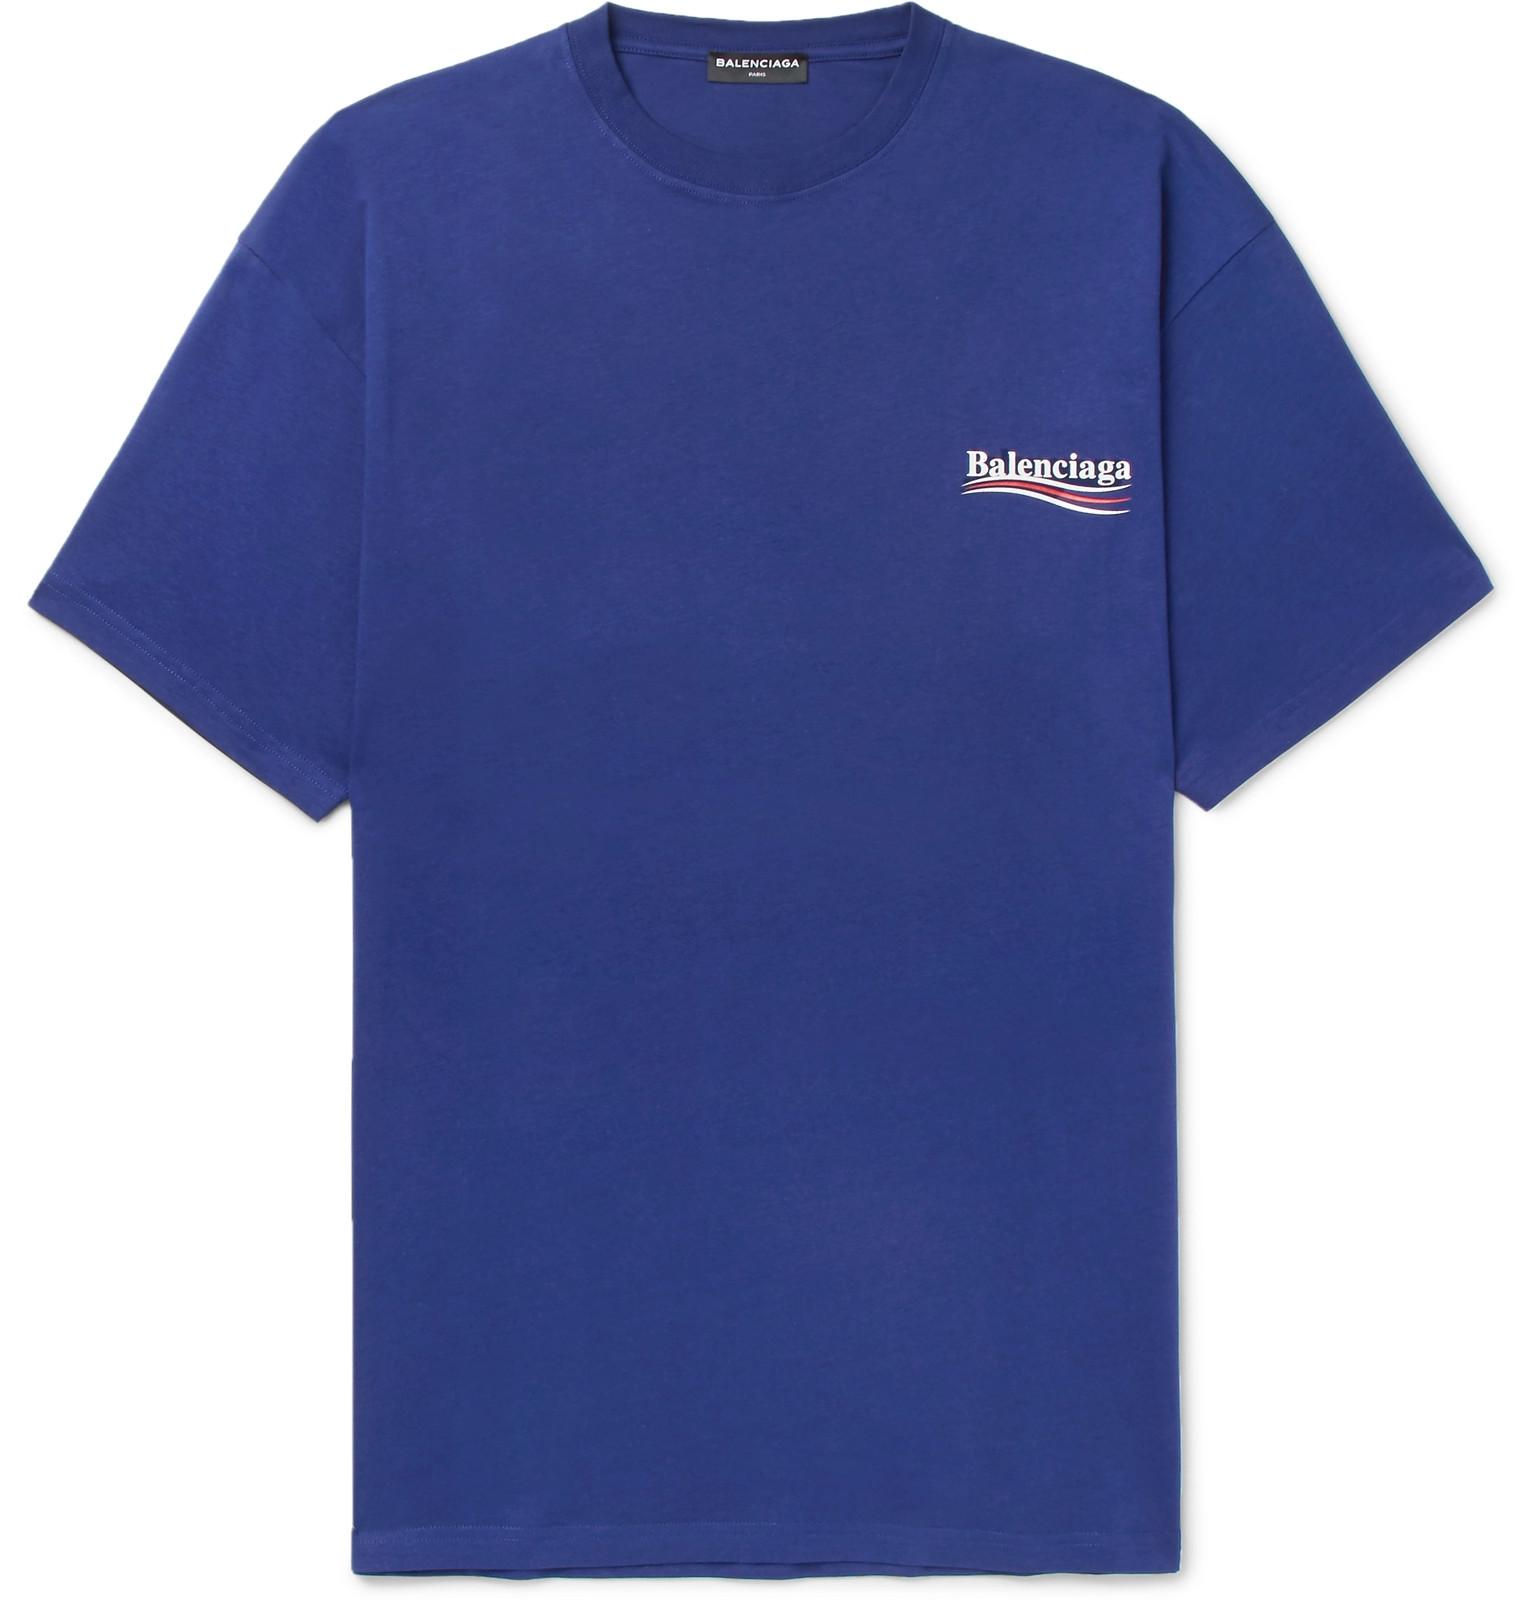 Balenciaga Cotton Logo Printed T-shirt in Blue for Men - Save 10% - Lyst